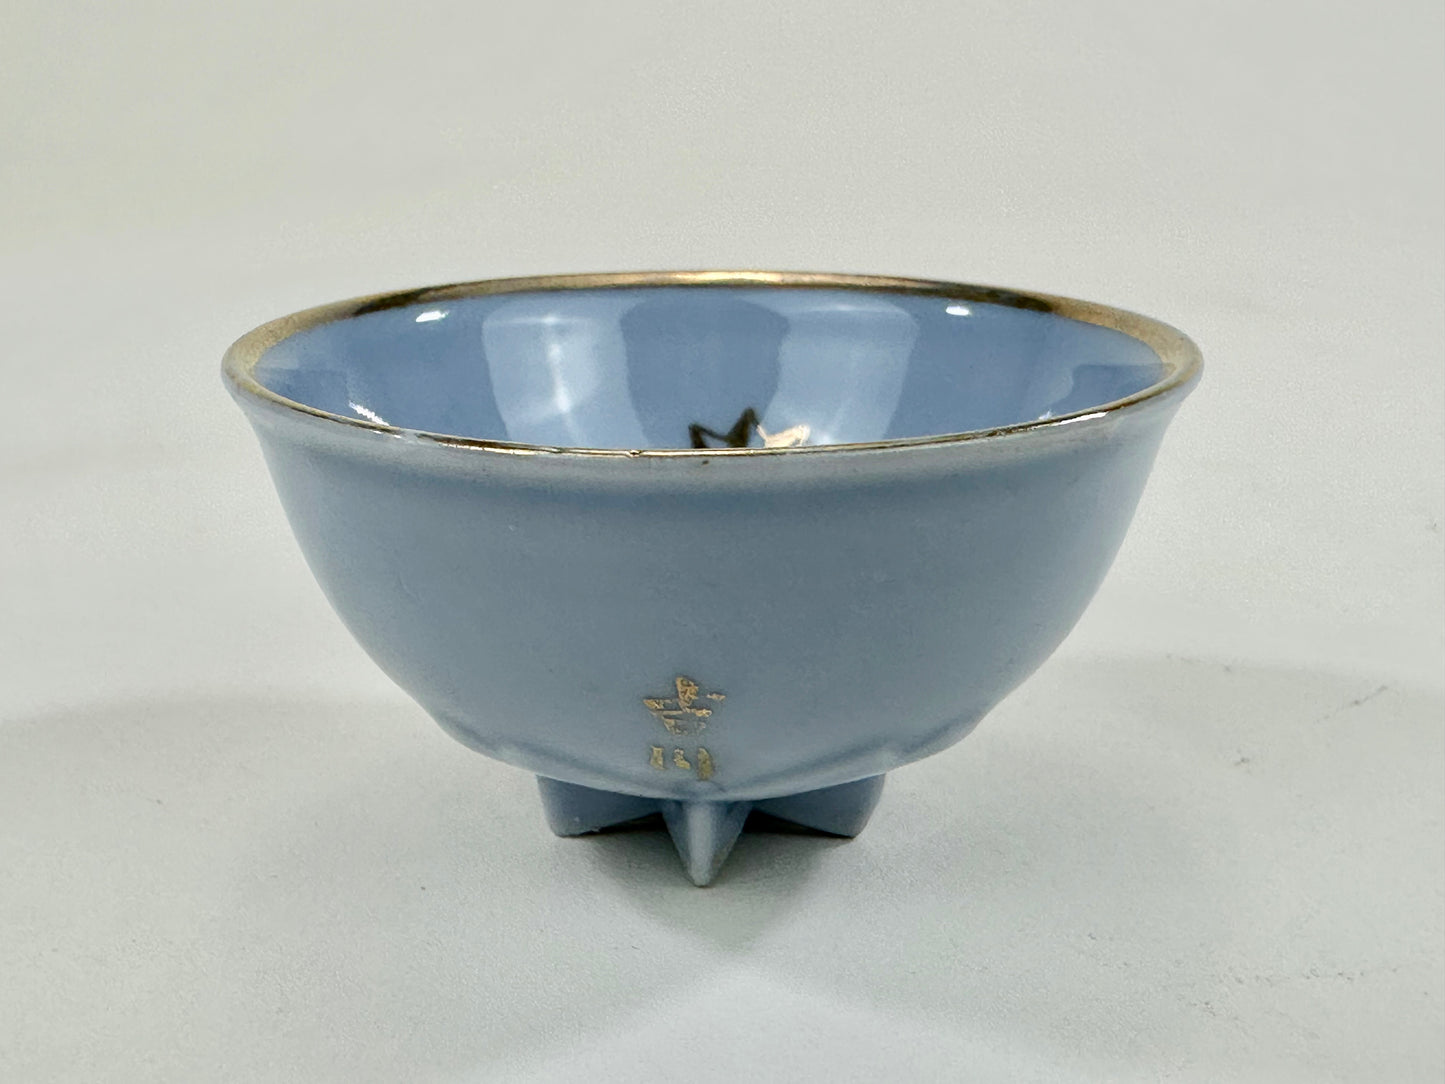 Antique Japanese c1930's Ceramic Sake Cup "Loyalty" Cherry Blossom